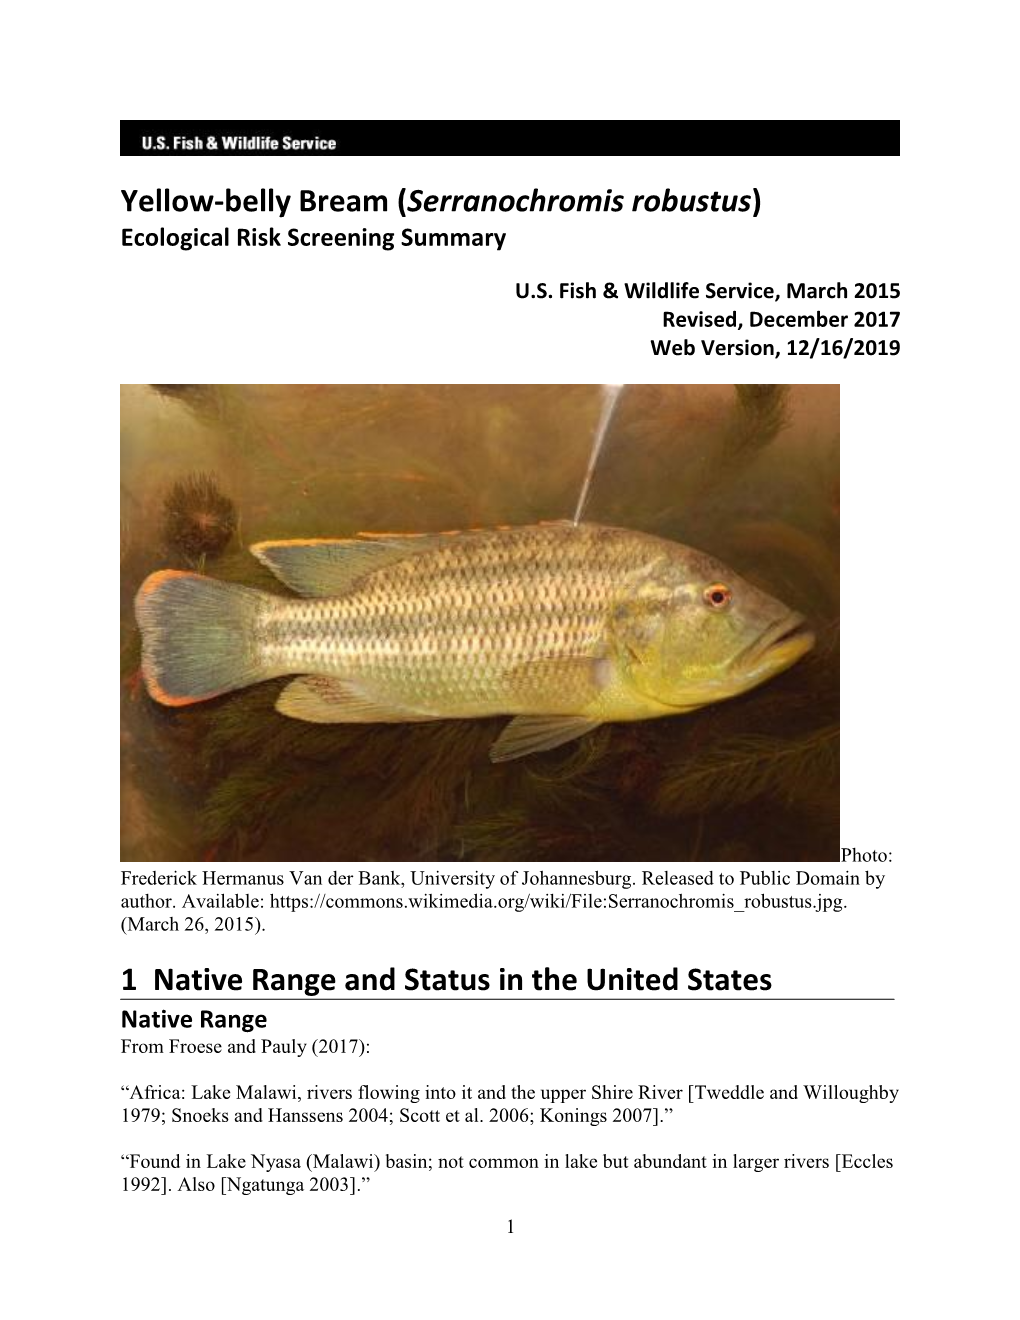 Yellowbelly Bream (Serranochromis